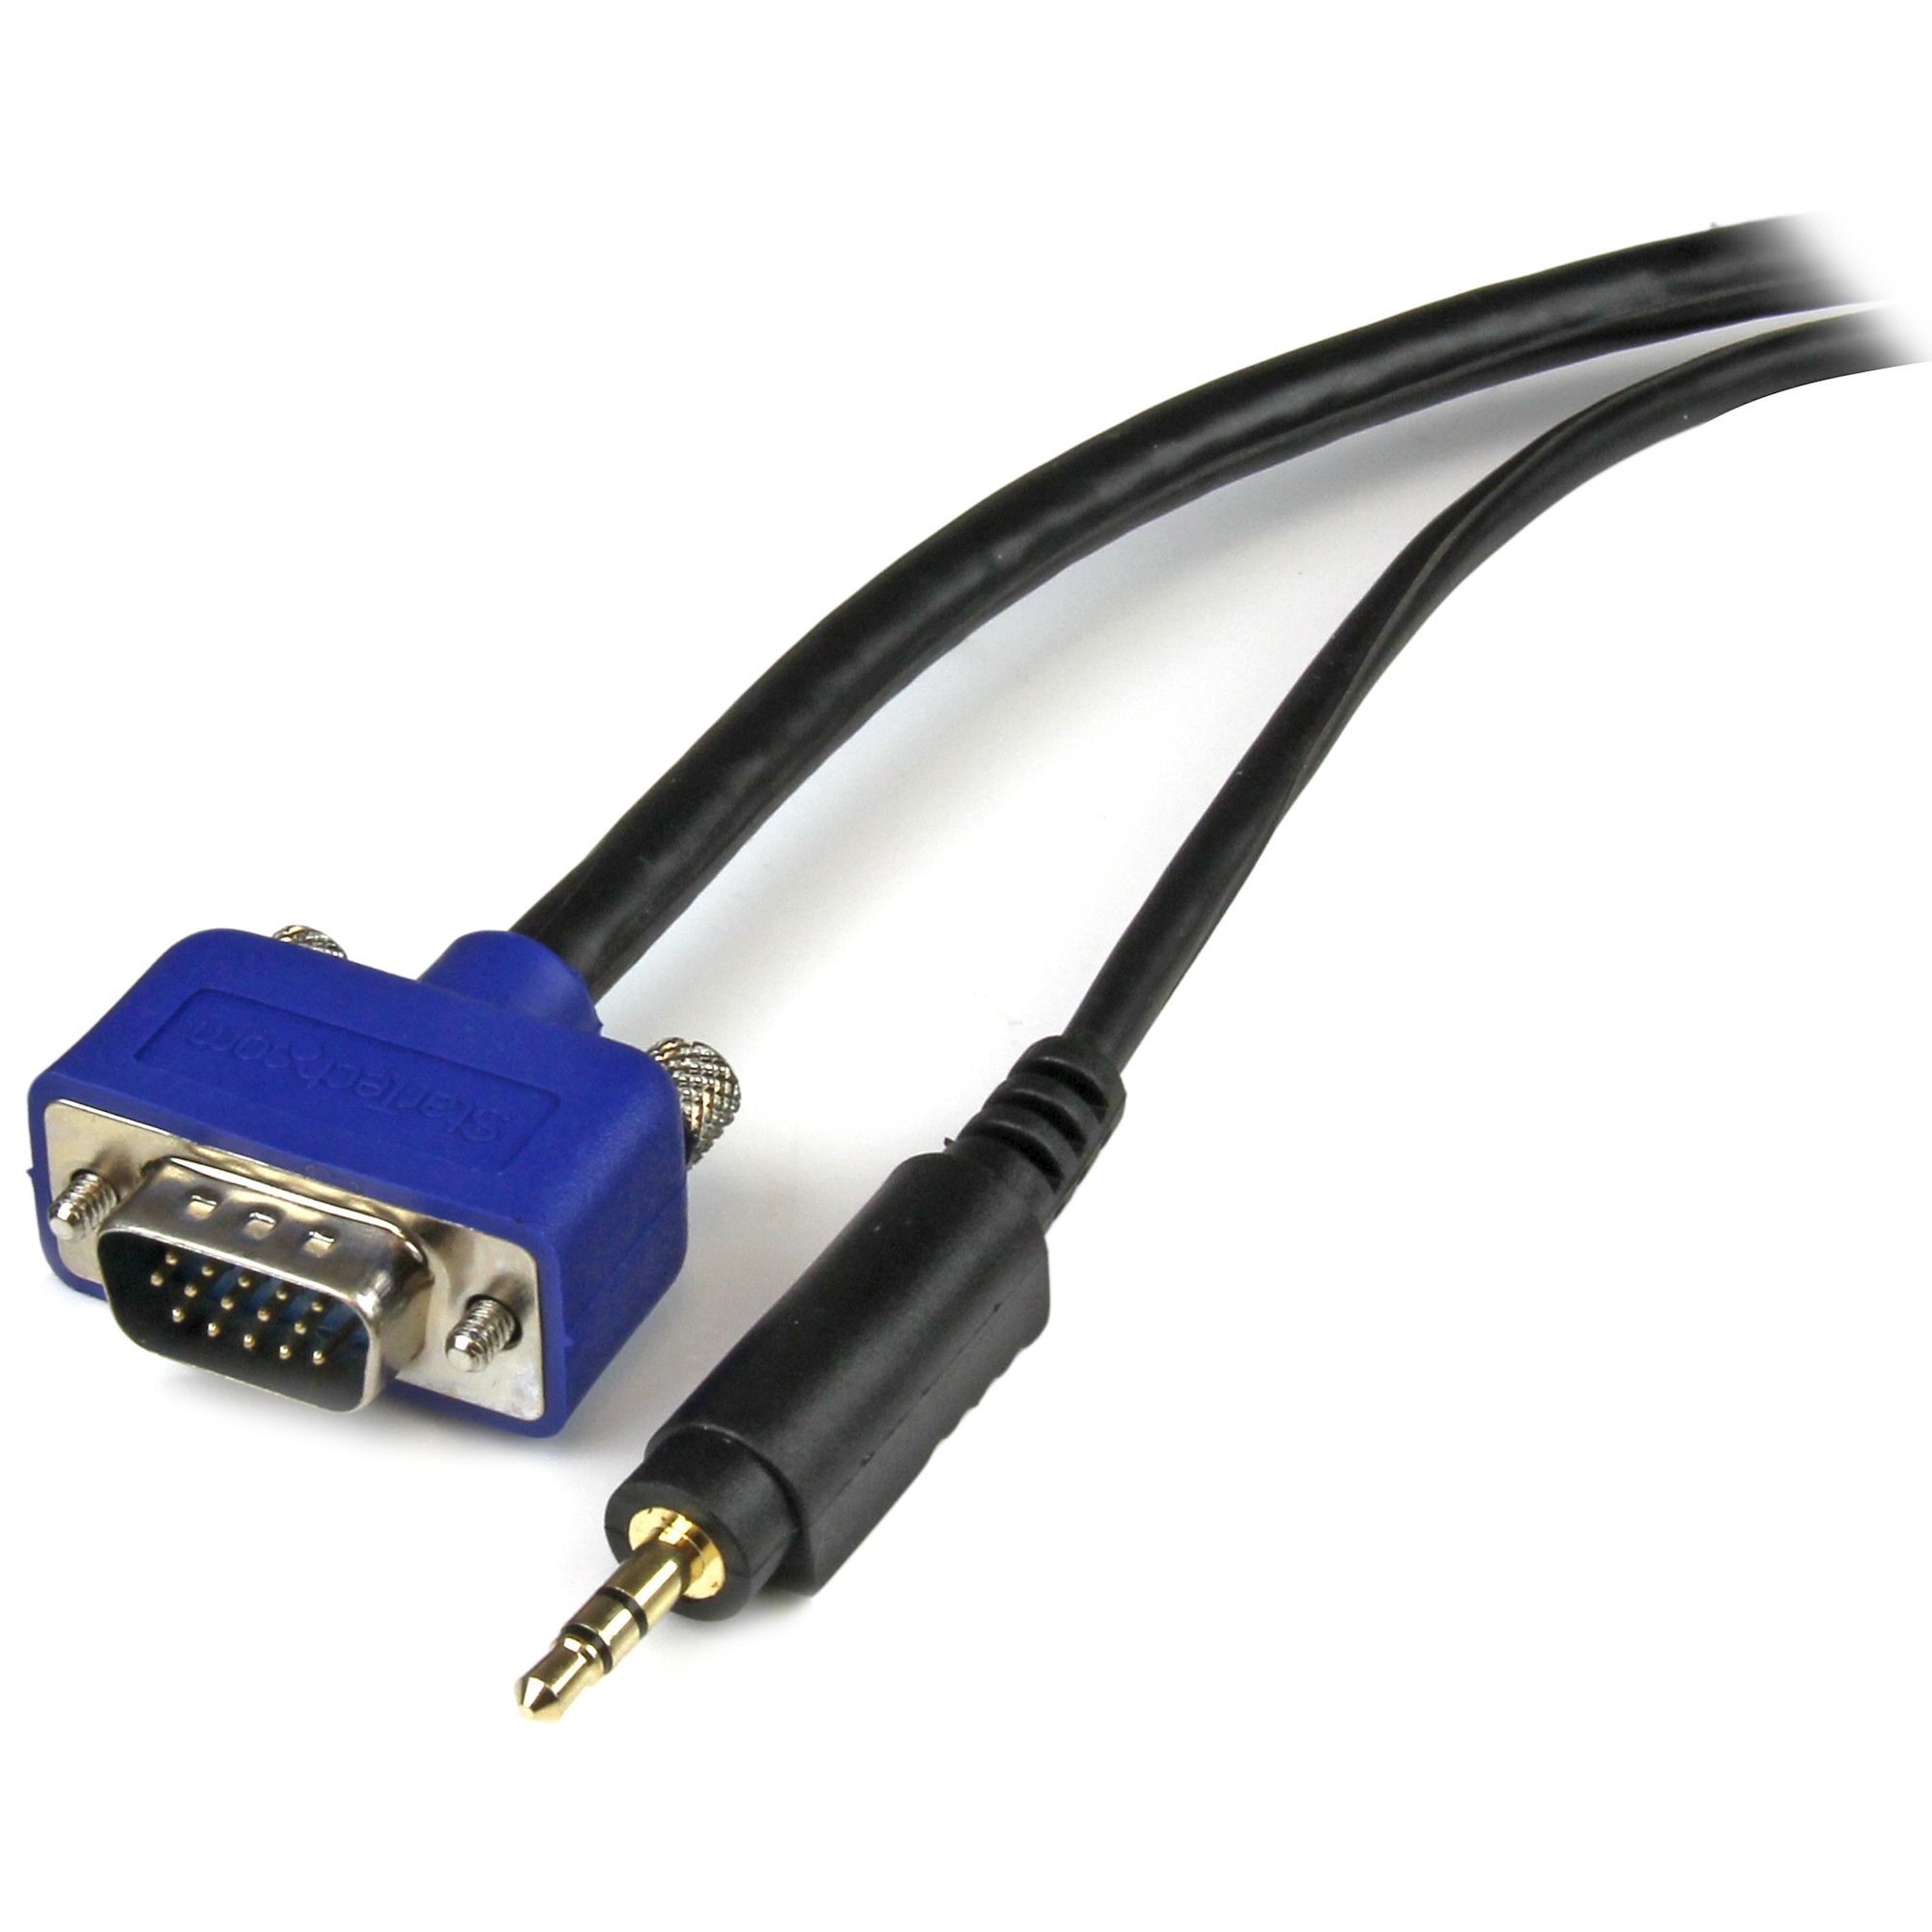 Verwaarlozing Onophoudelijk werkzaamheid 6 ft High Res Monitor VGA Cable w/ Audio - VGA Cables | StarTech.com